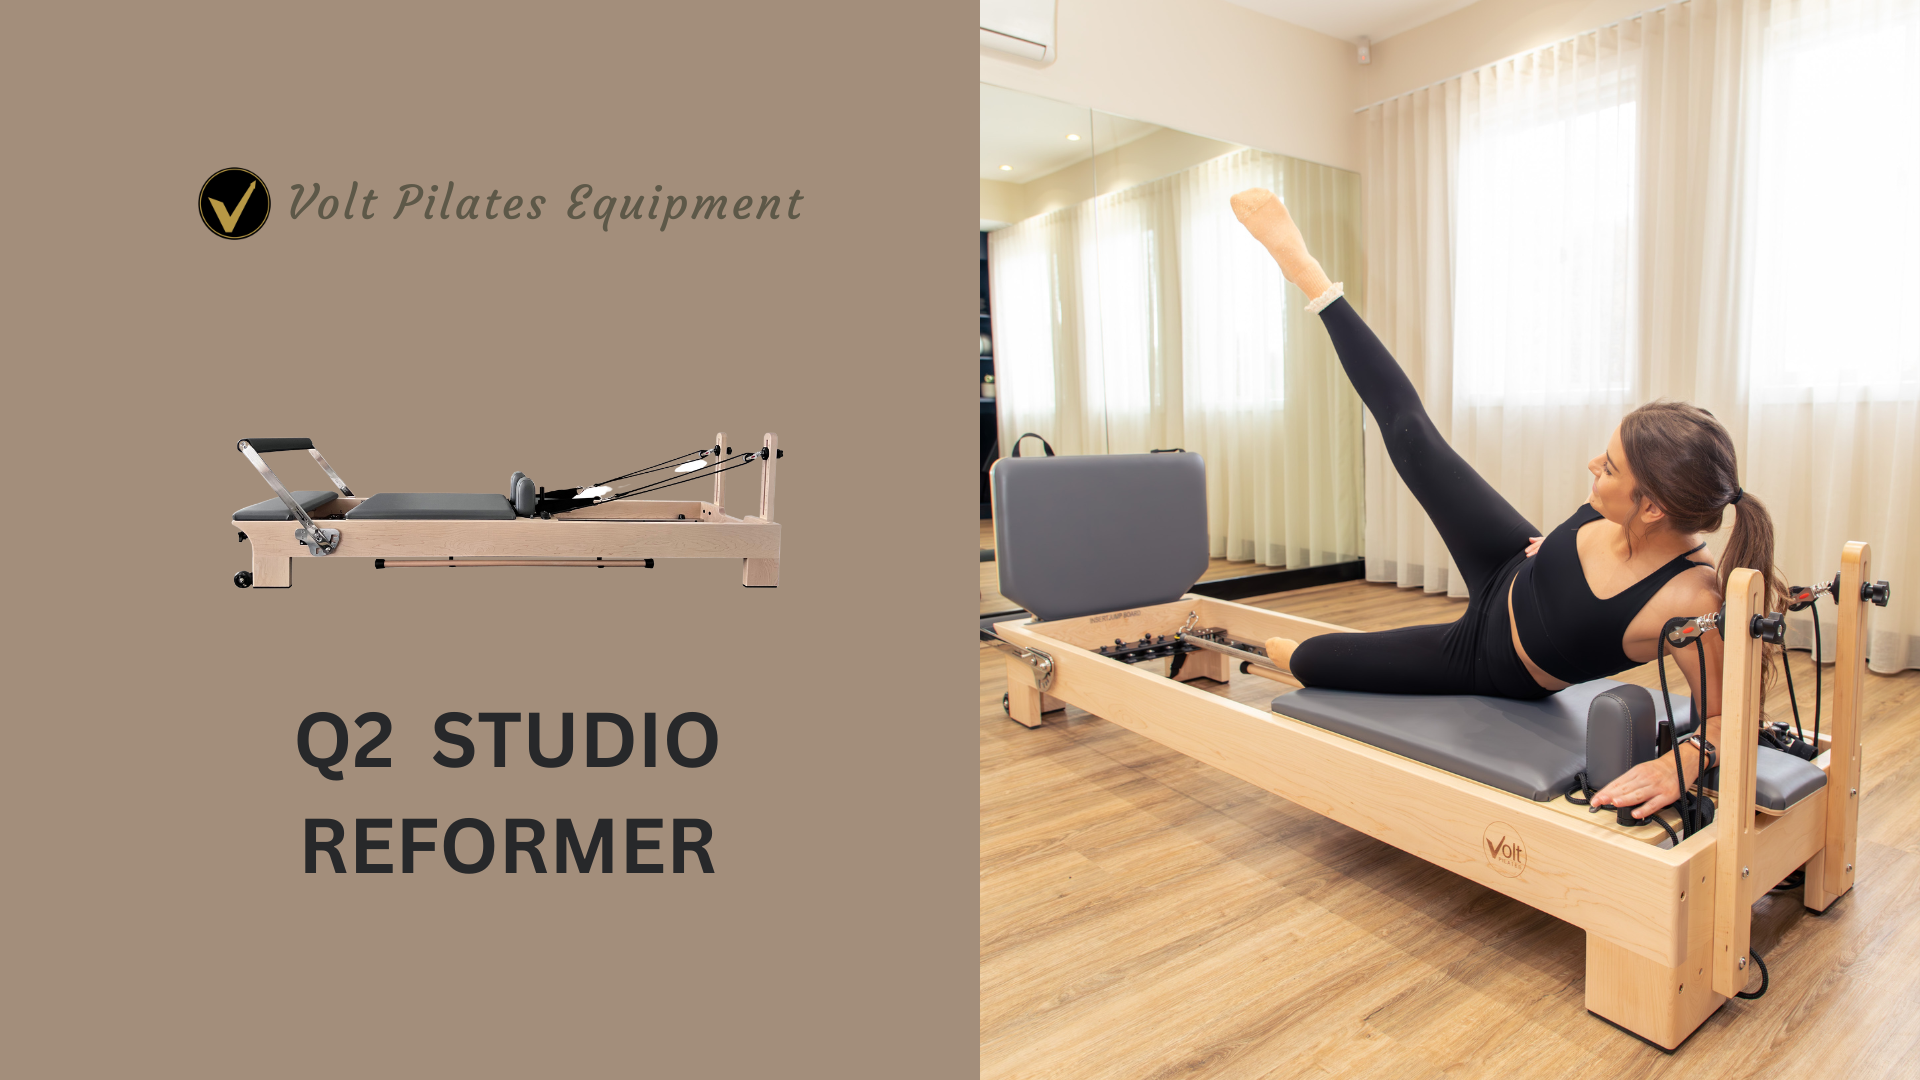 Ivory/Gratz Pilates  Pilates equipment, Pilates reformer, Pilates studio